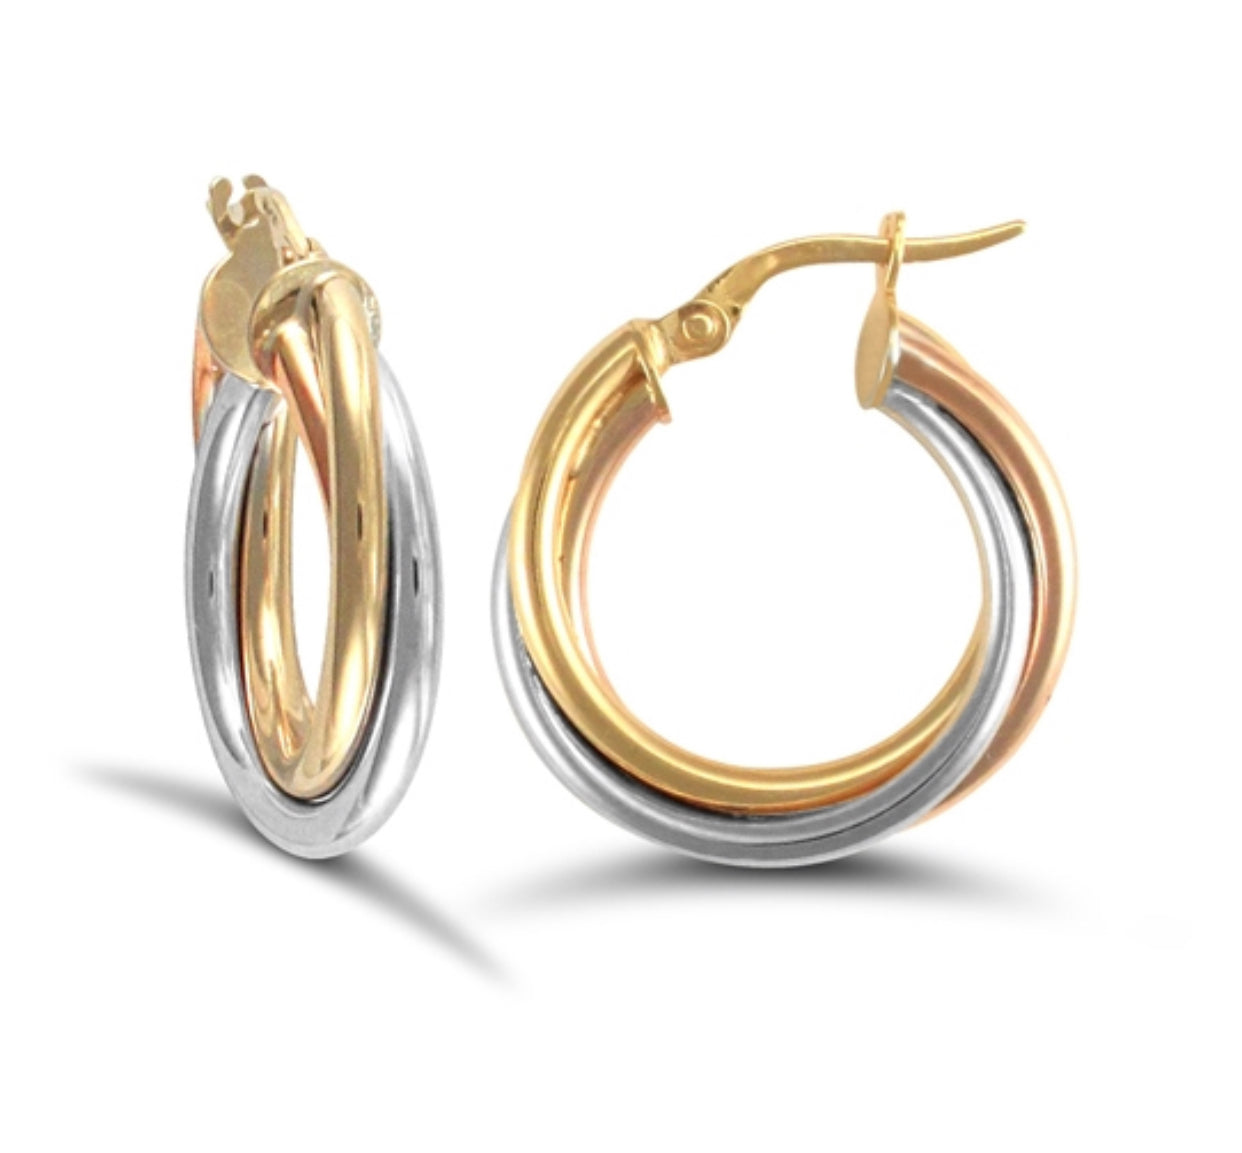 3 colour gold twist hoop earrings 2.6g